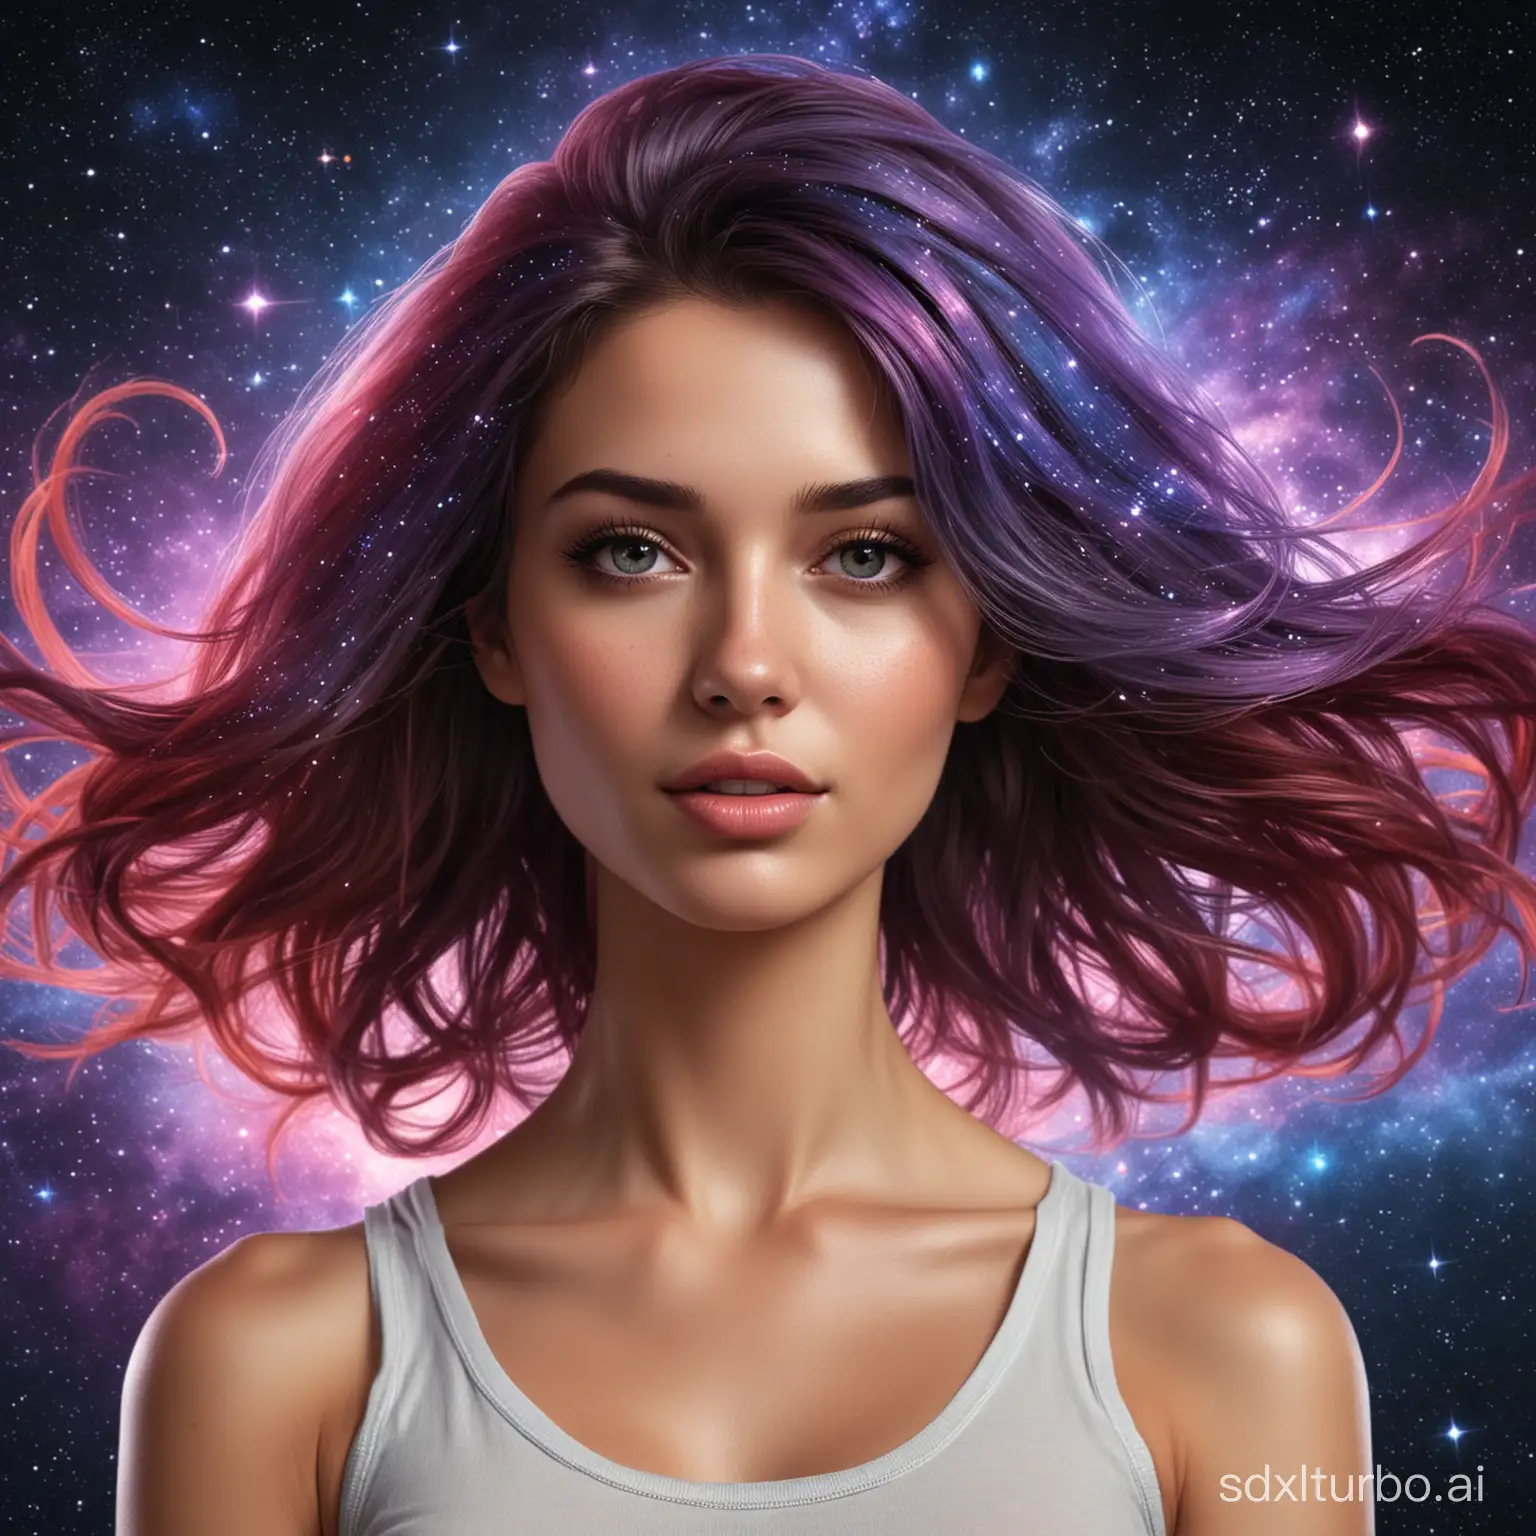 Galactic-Woman-with-Celestial-Hair